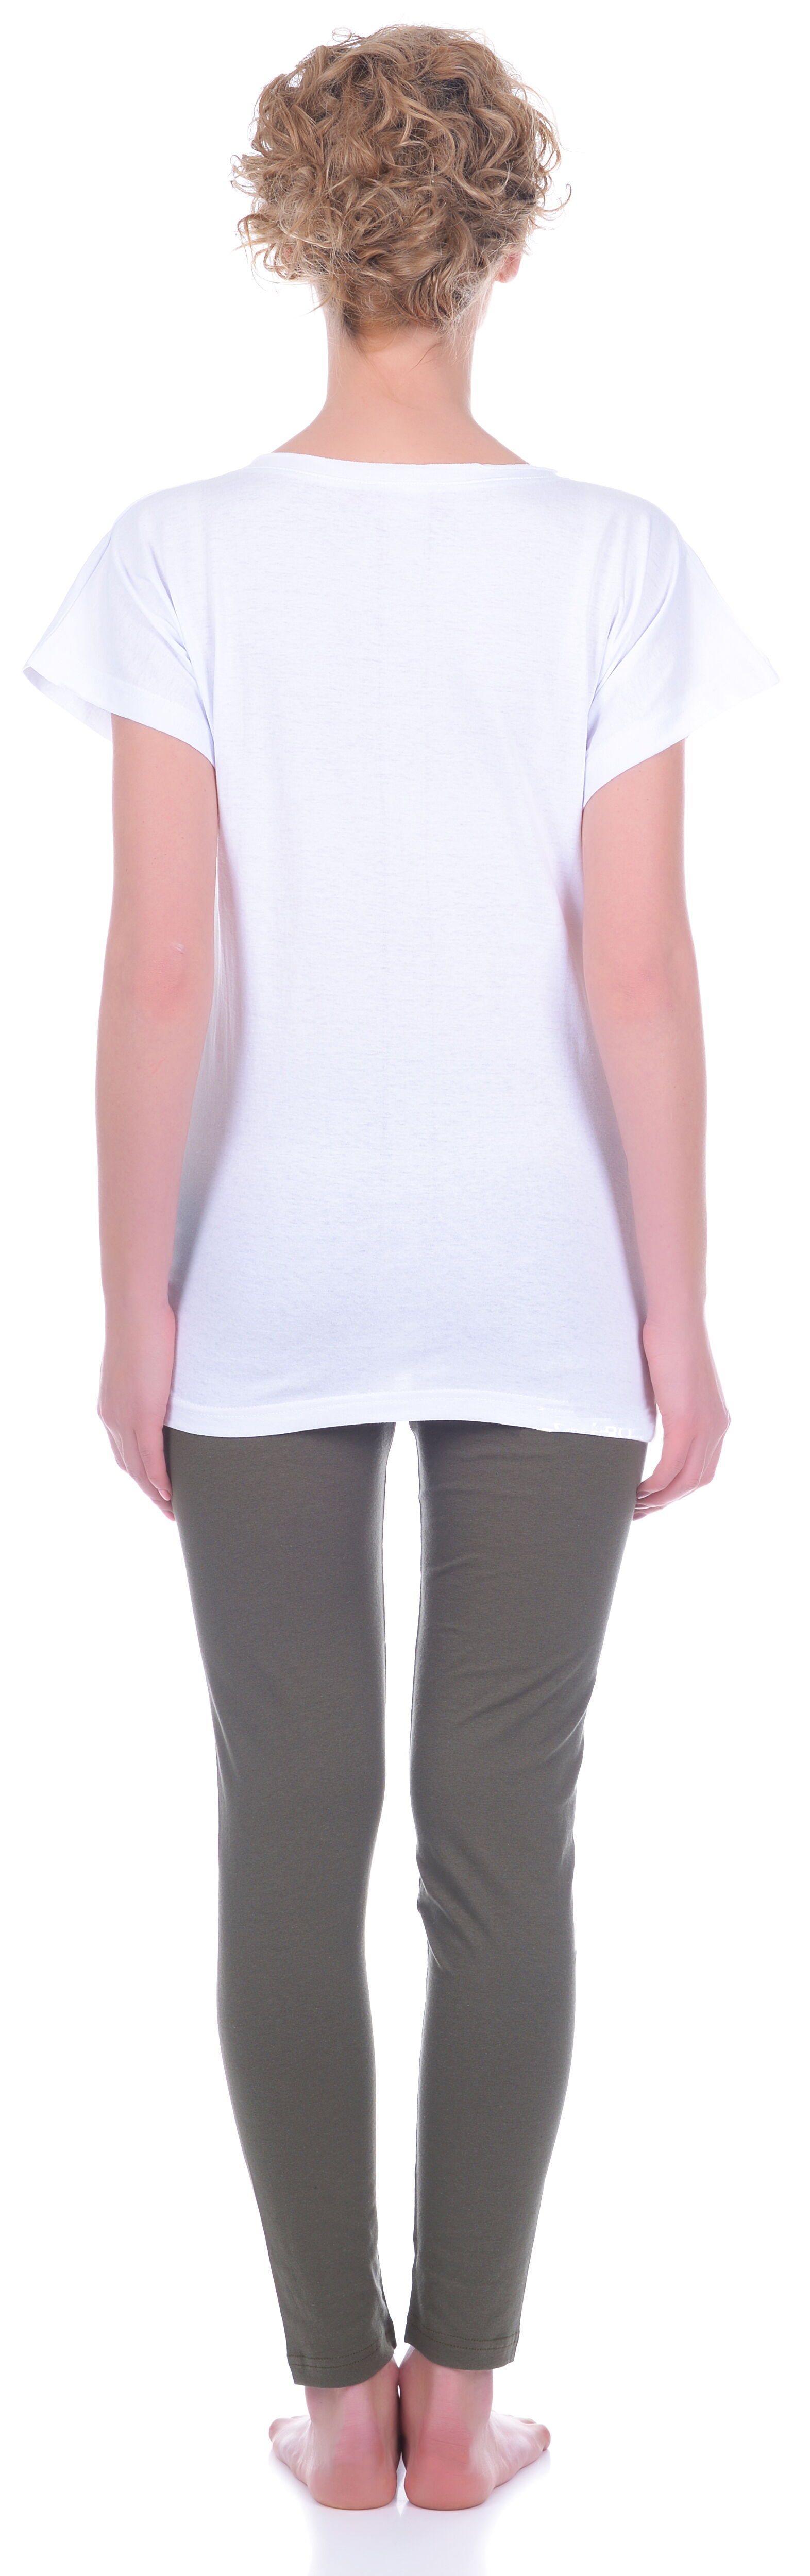 Комплект женский (футболка+штаны) MISS FIRST MEXICO белый - размеры